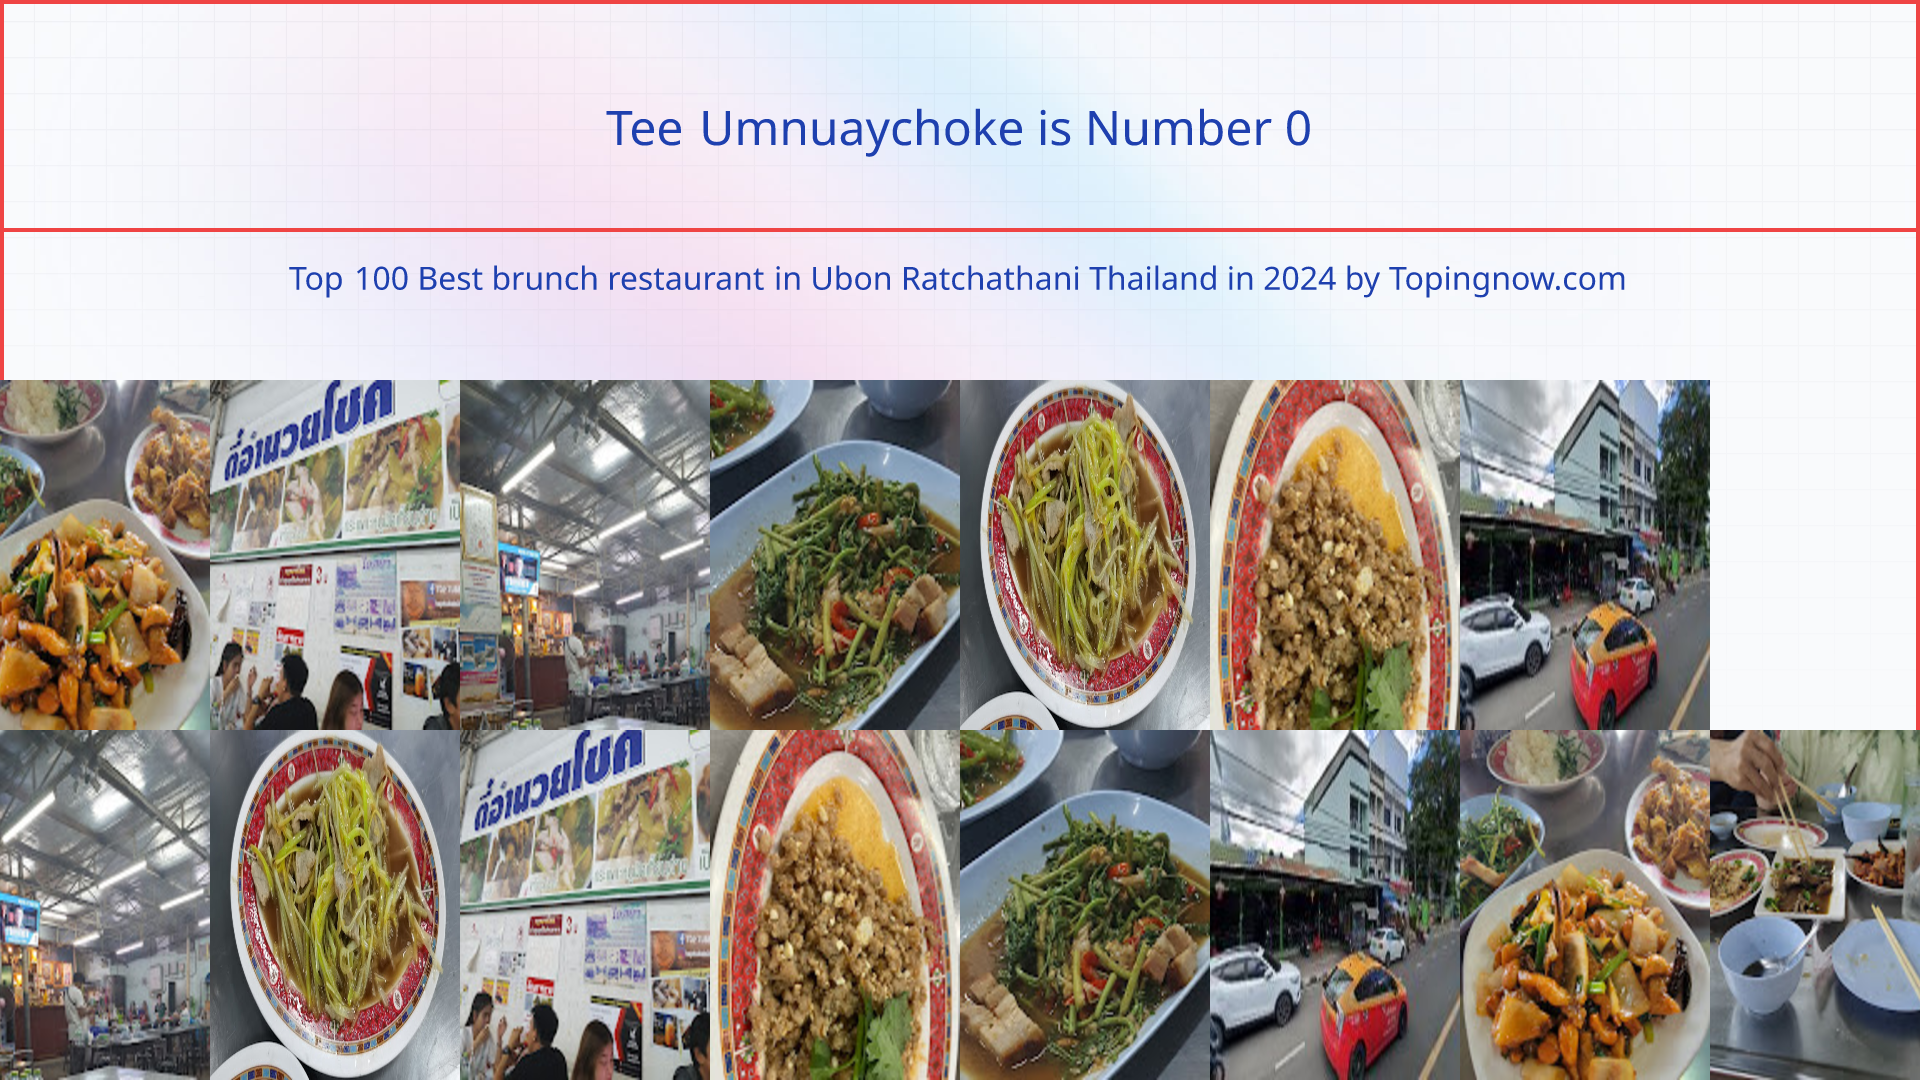 Tee Umnuaychoke: Top 100 Best brunch restaurant in Ubon Ratchathani Thailand in 2024